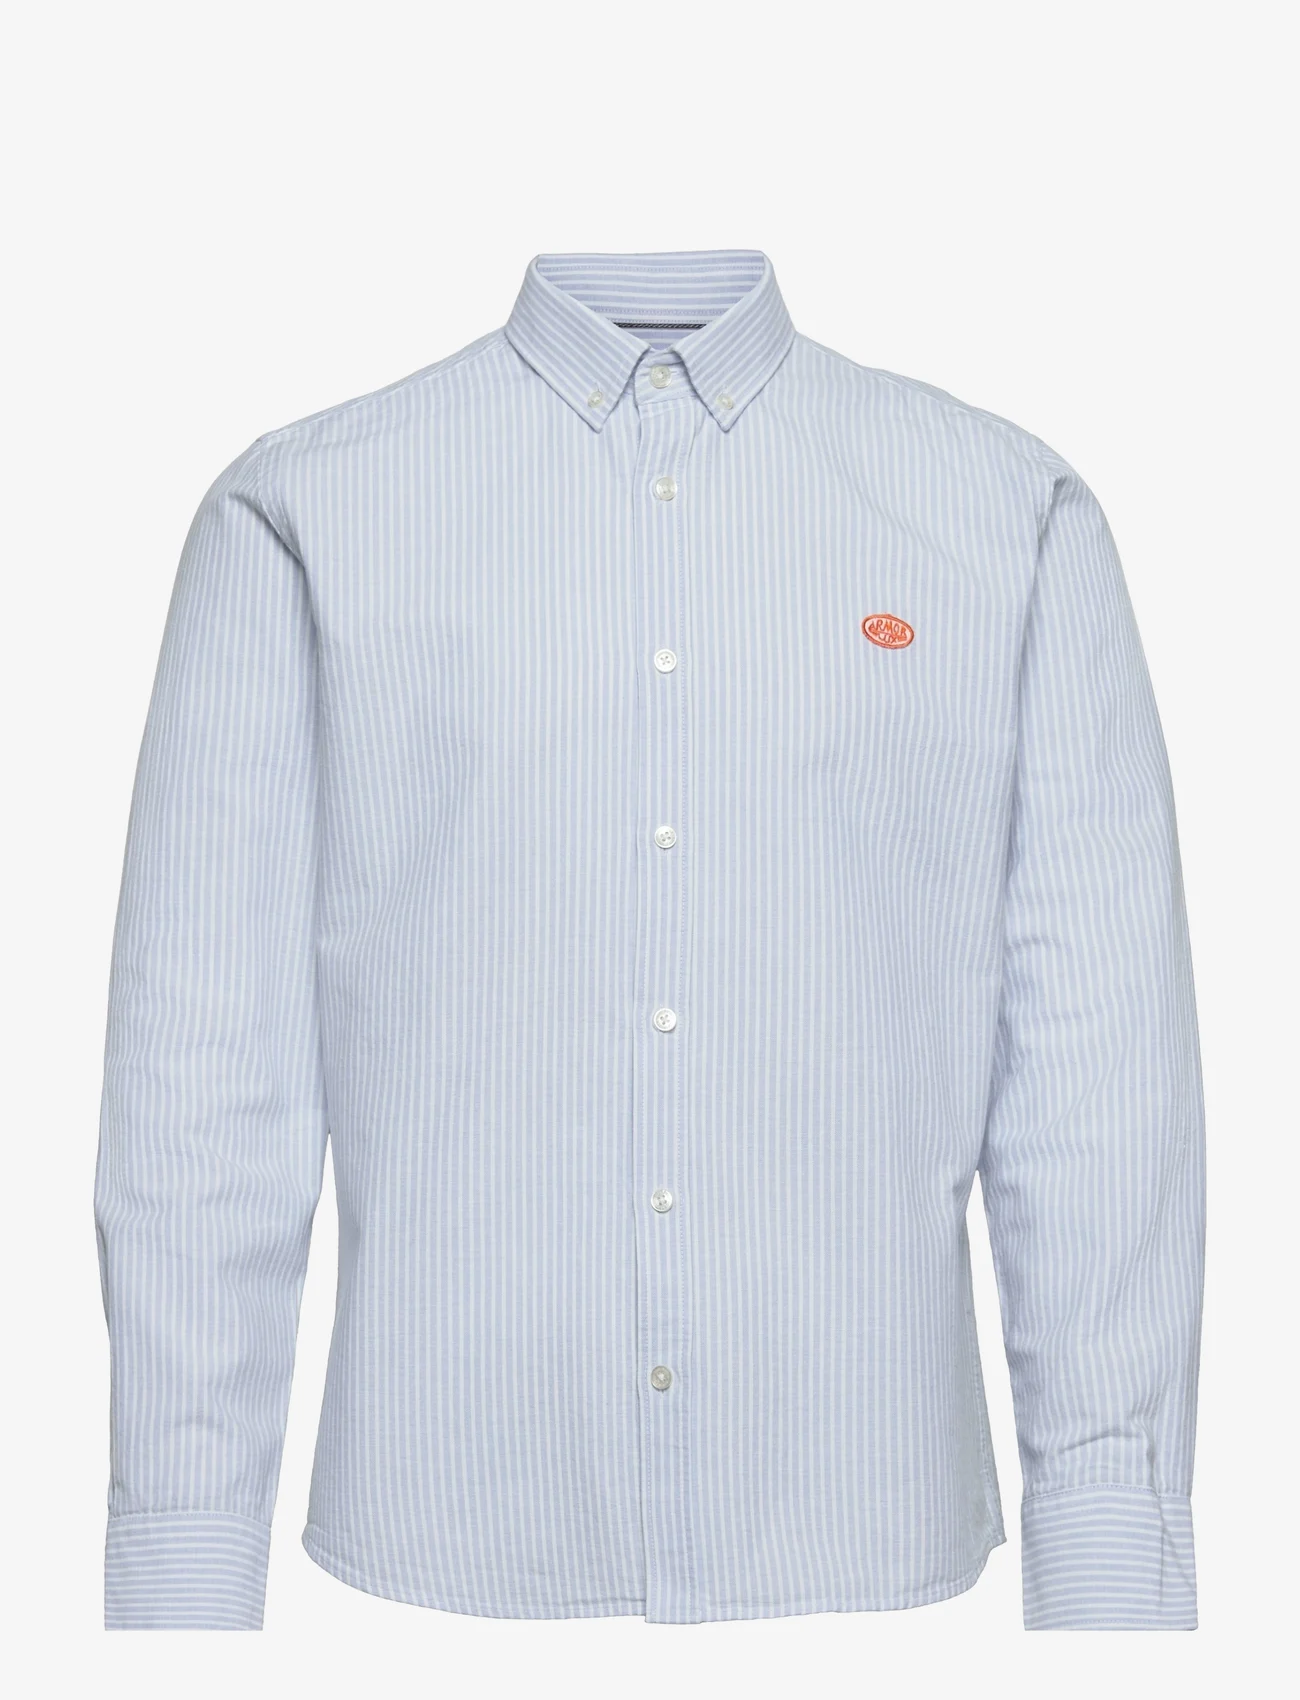 Armor Lux - Oxford shirt - oxford-kauluspaidat - sky blue/milk - 0